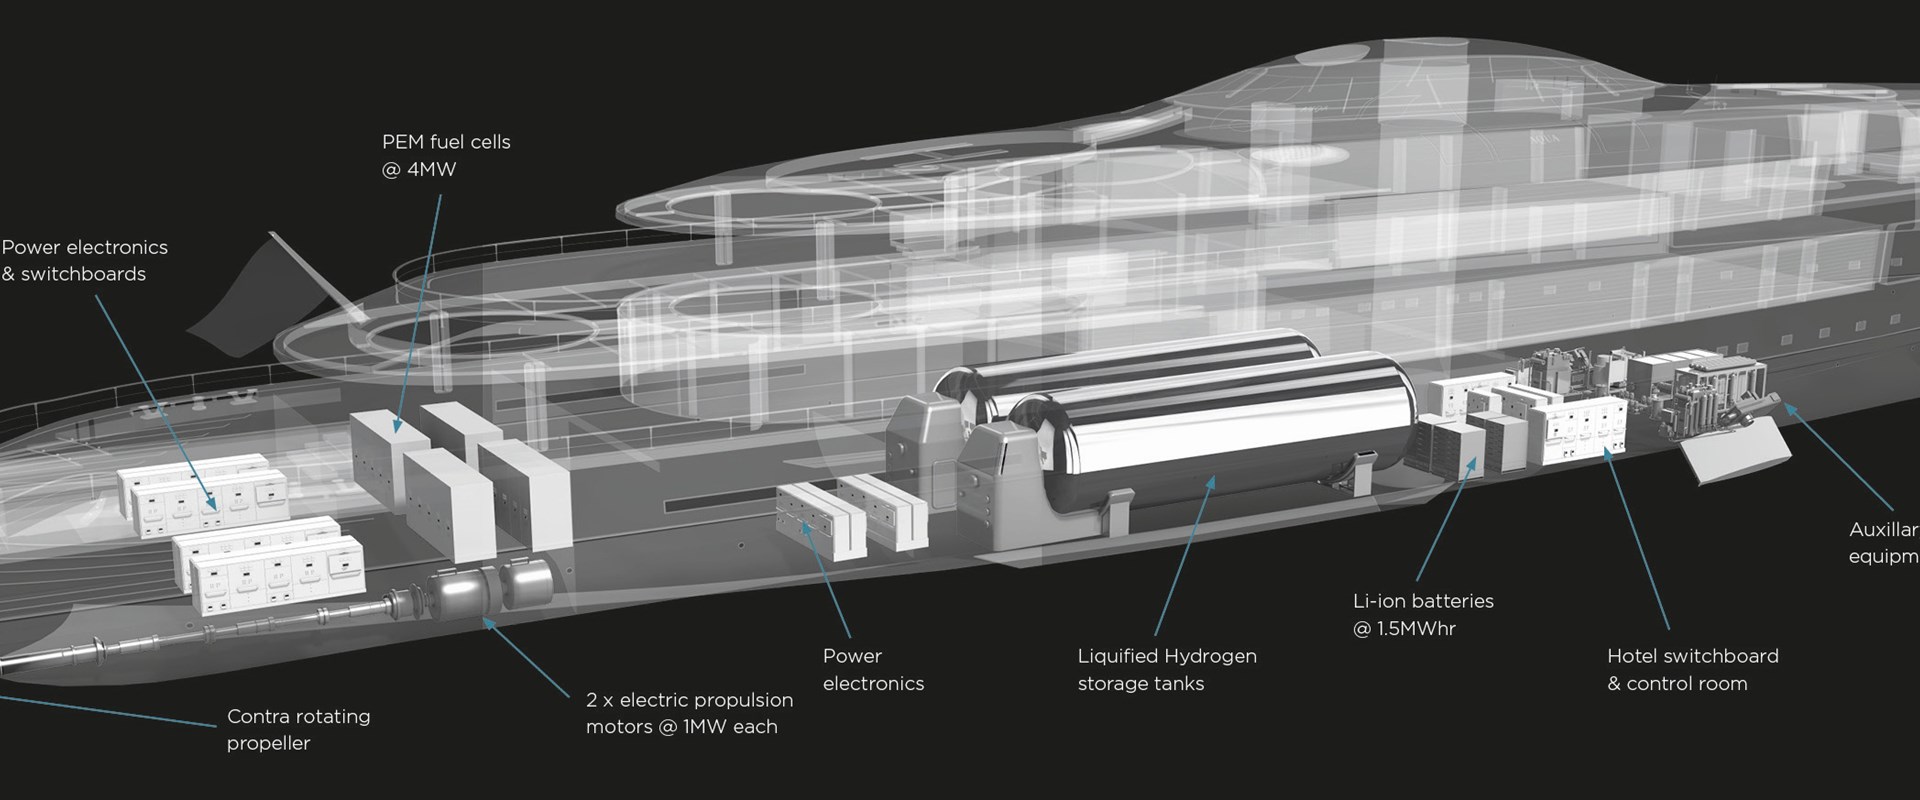 Technical rendering image of AQUA yacht